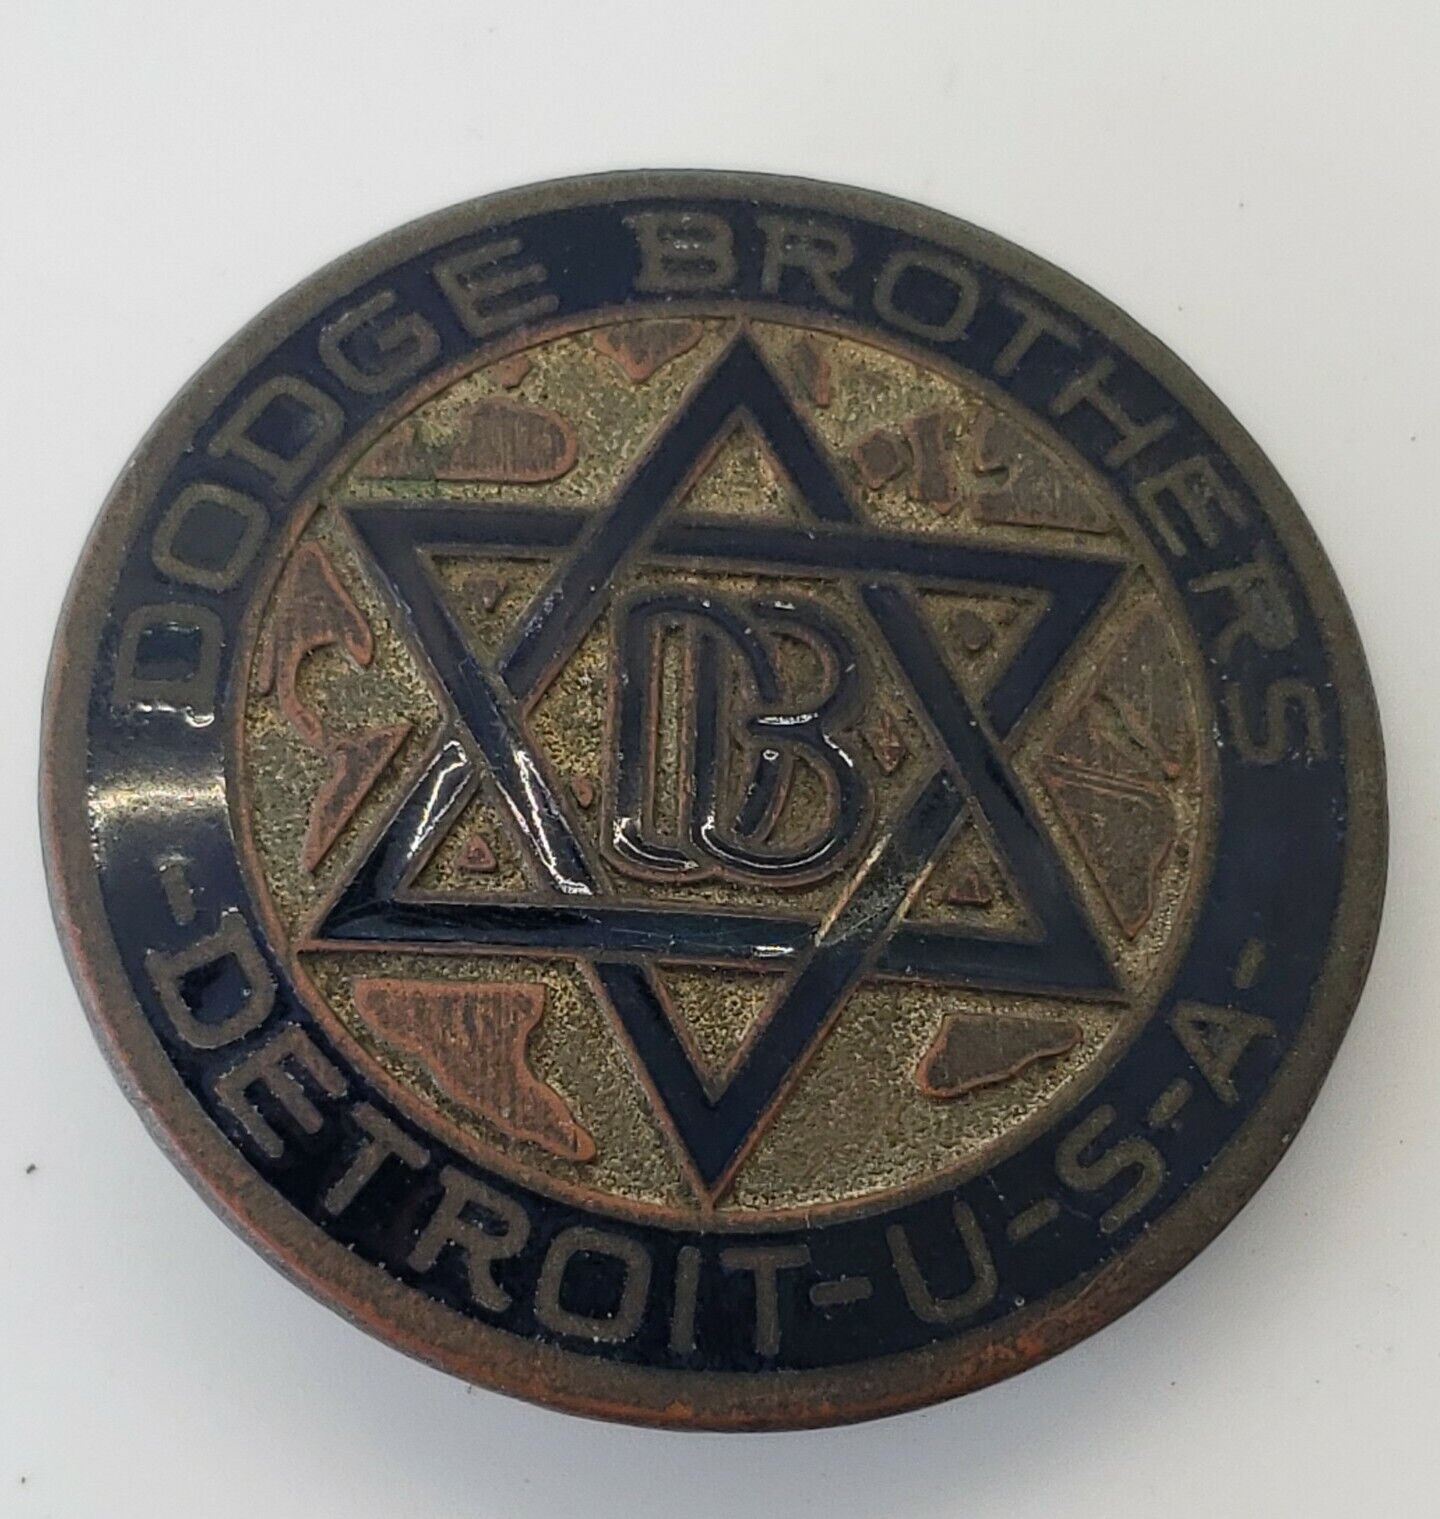 Antique 1926 Dodge Brothers enamel car automobile radiator emblem badge